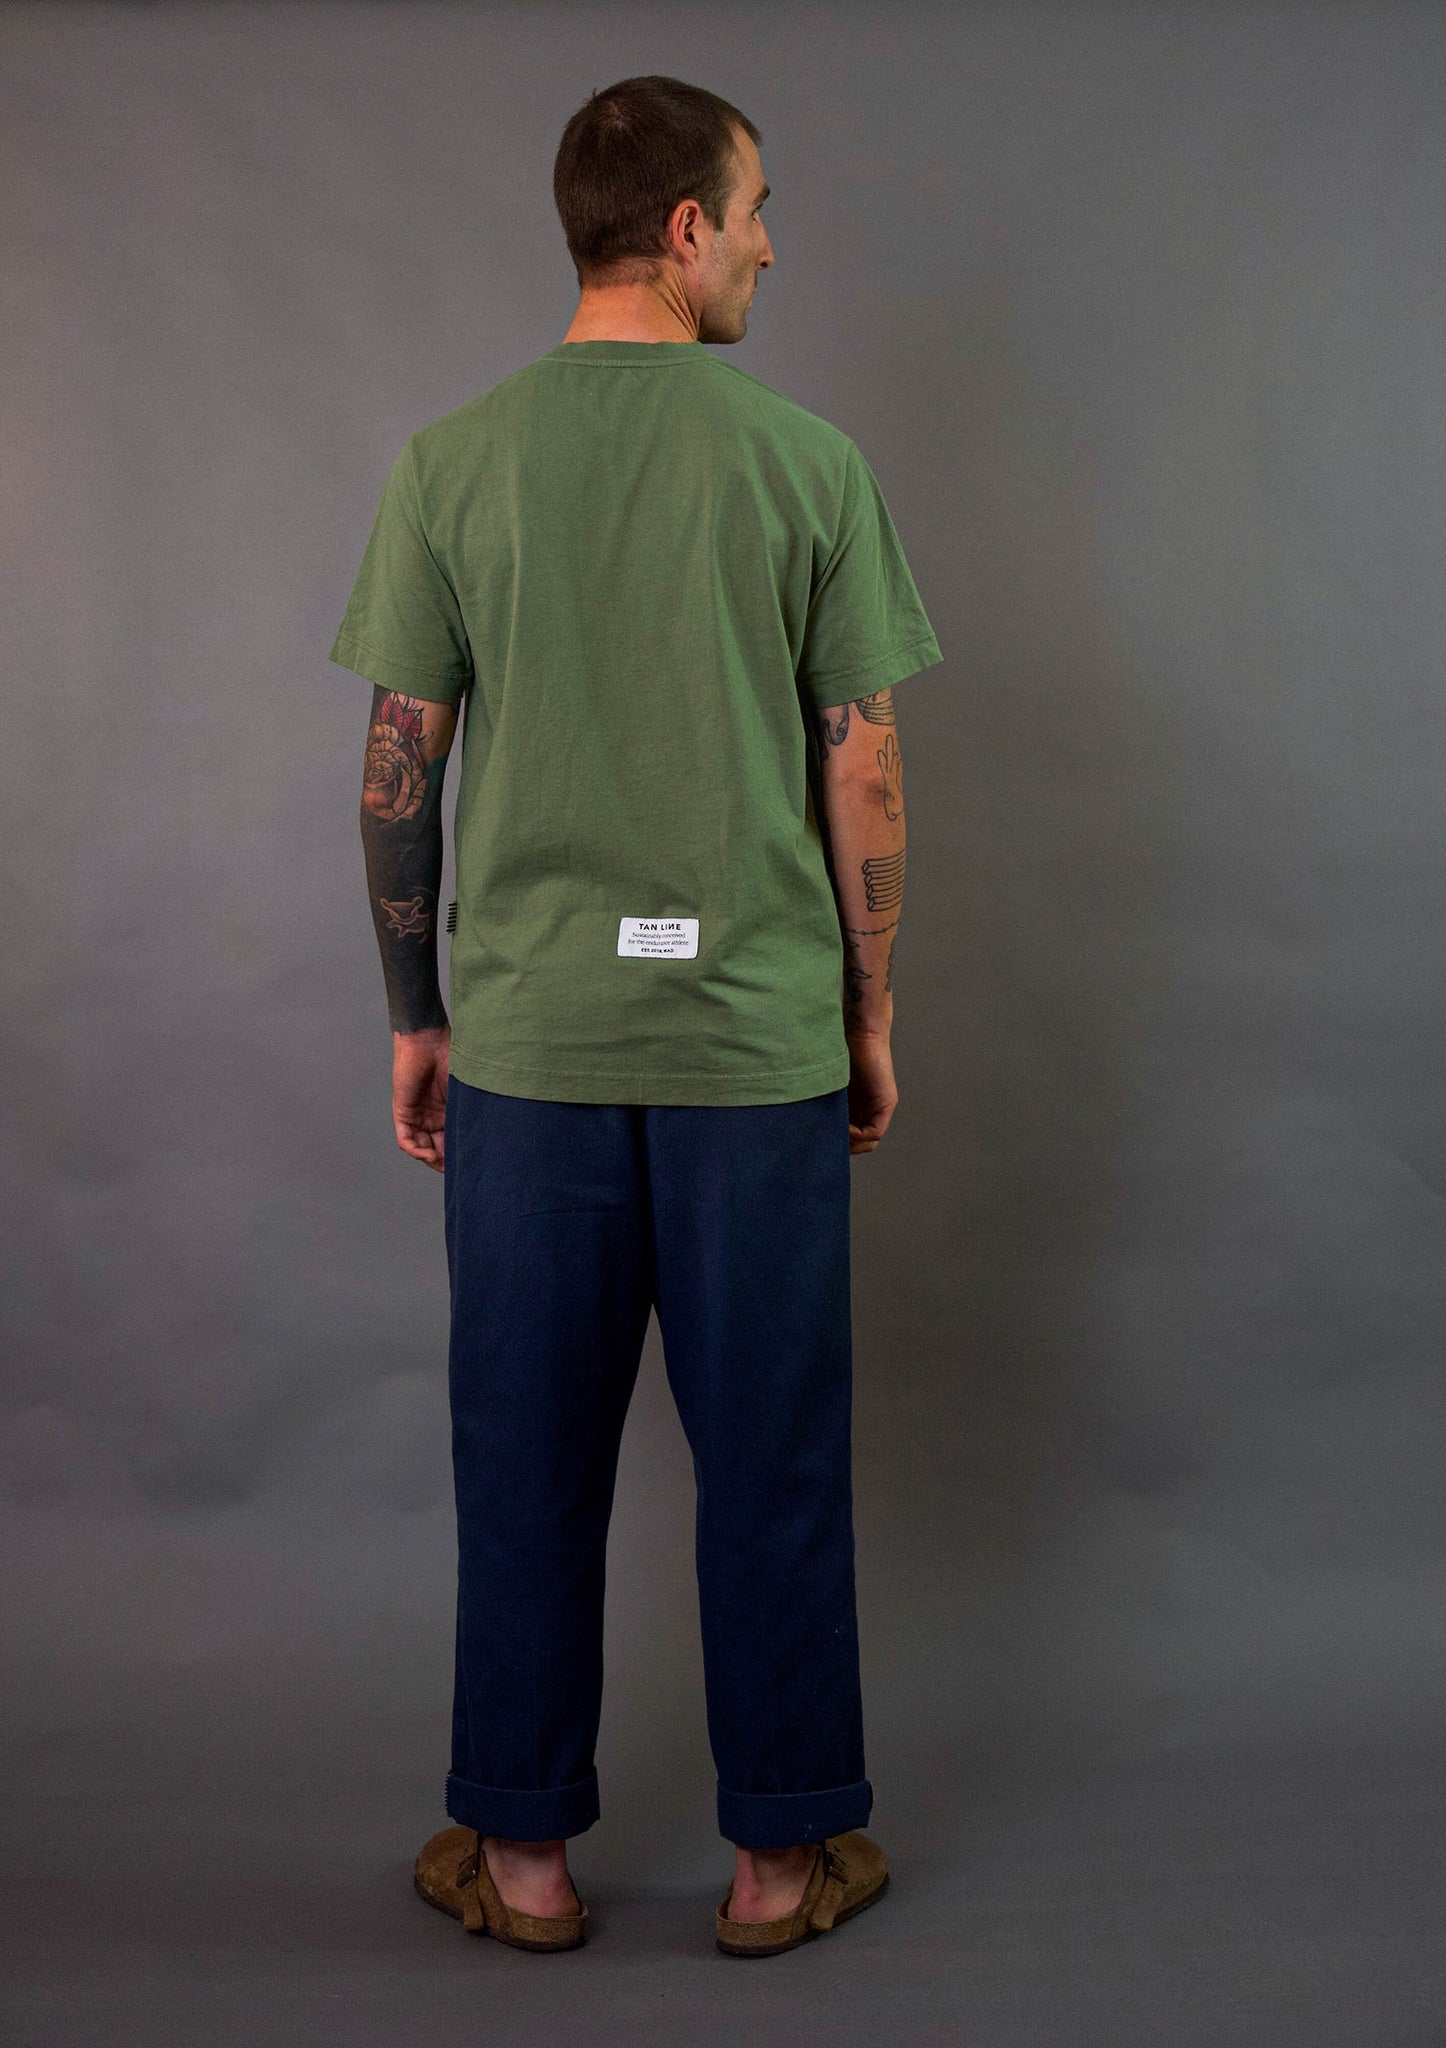 <span class="n-alreves">N</span>Camiseta algodón orgánico Moss Green